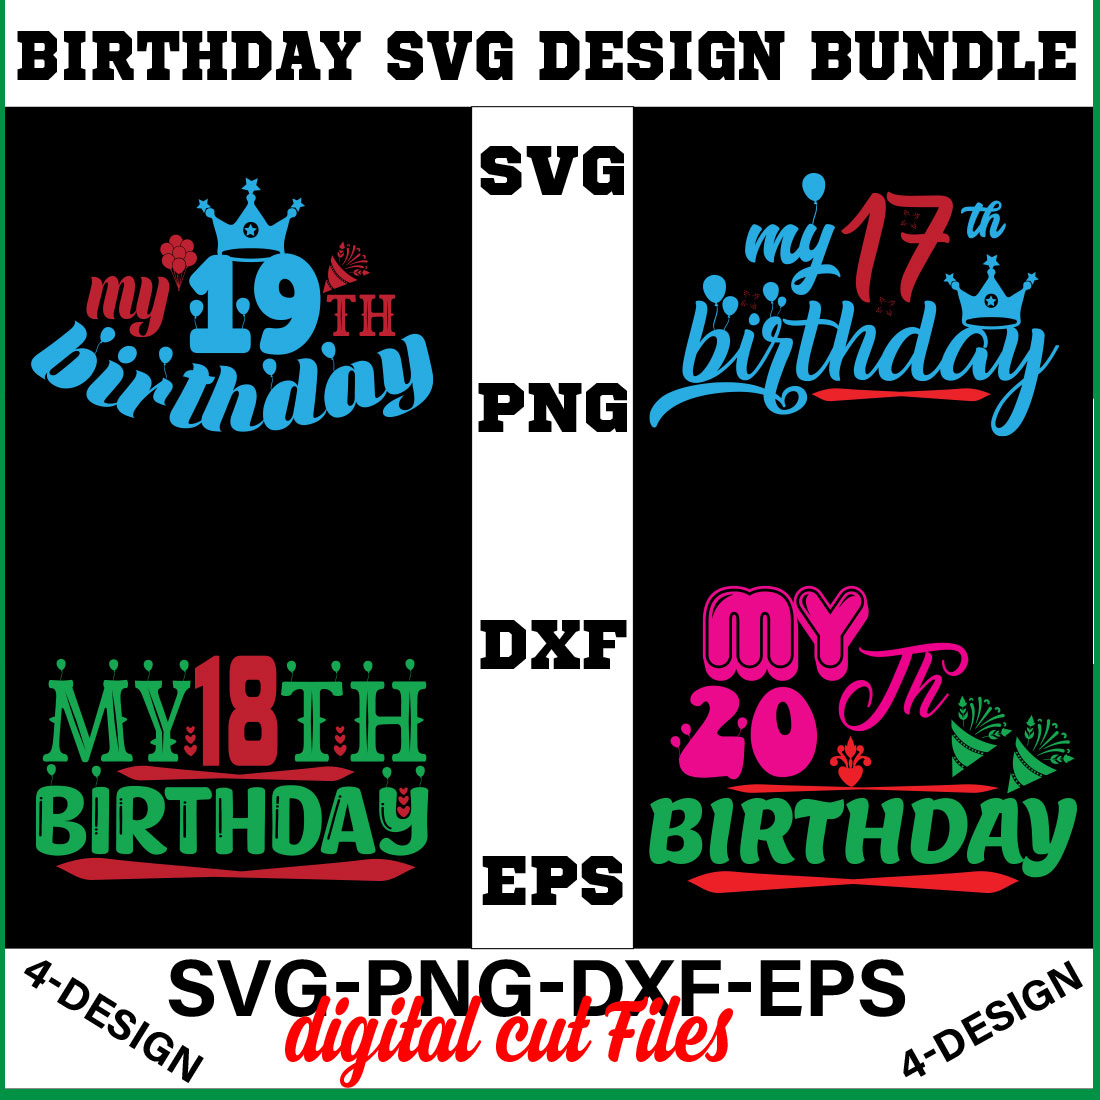 birthday svg design bundle Happy birthday svg bundle hand lettered birthday svg birthday party svg Volume-21 cover image.